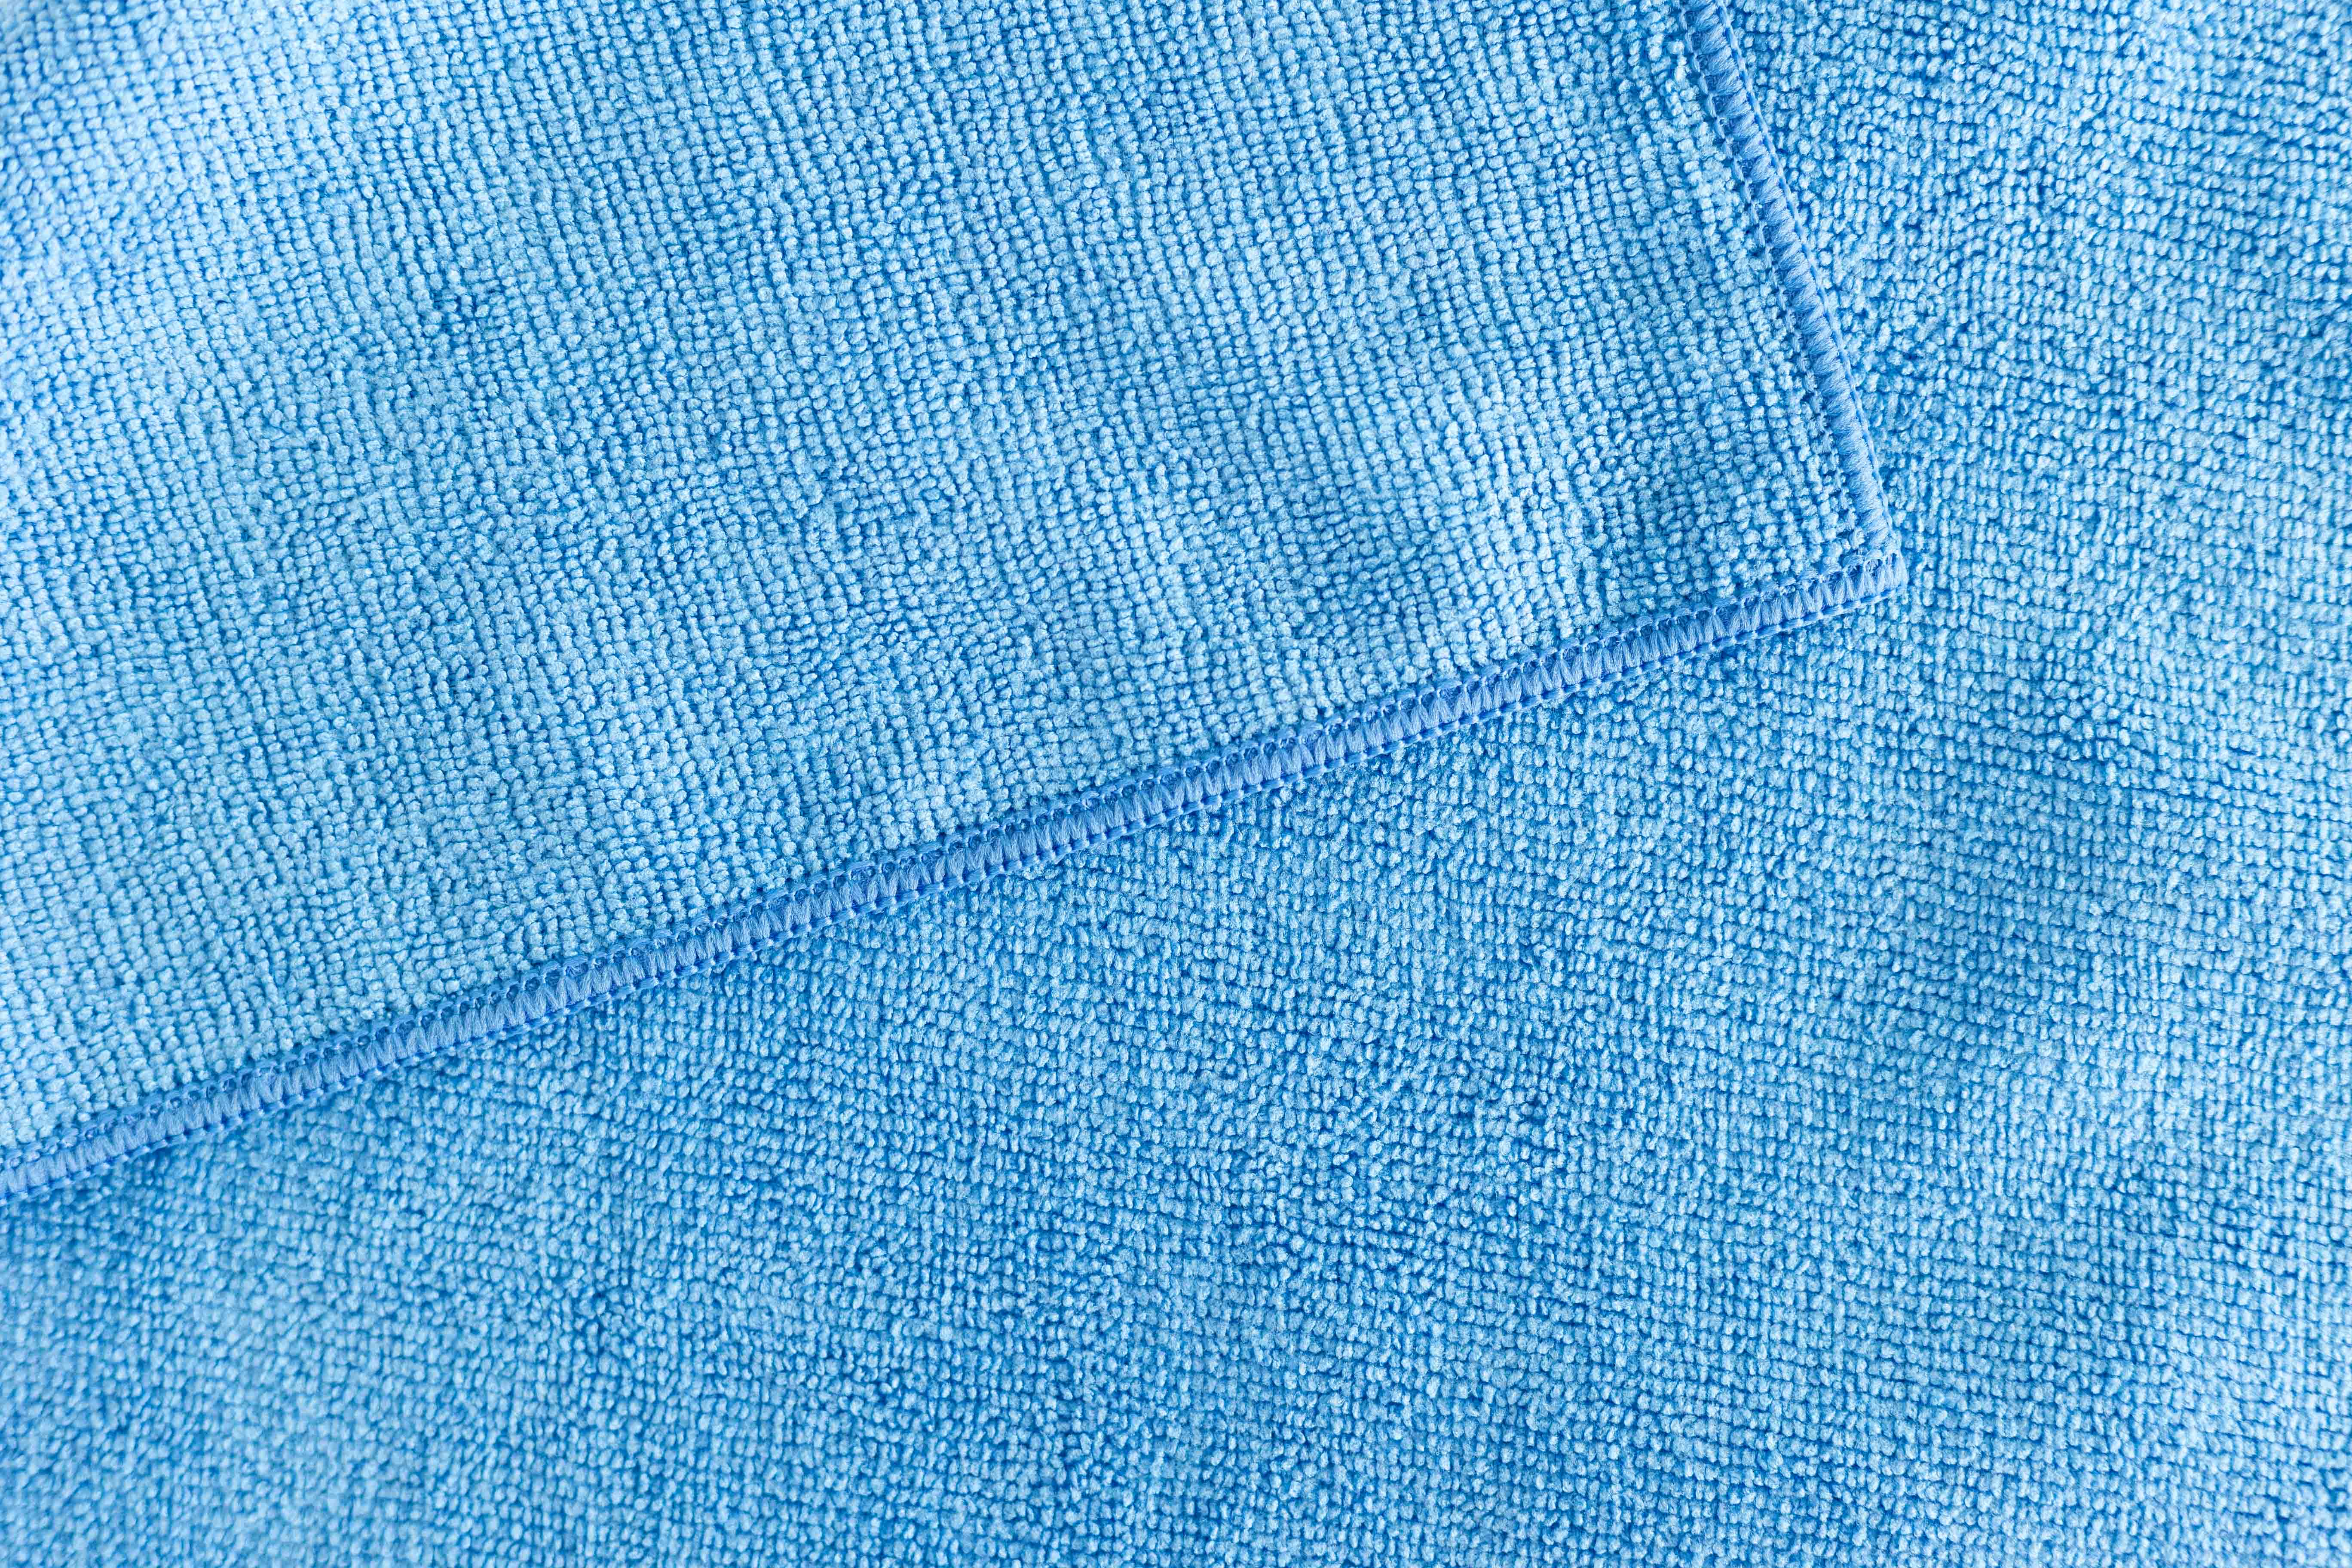 Microfibre Towel Blue 40x40cm (48gr) 3317:10:B  .jpg